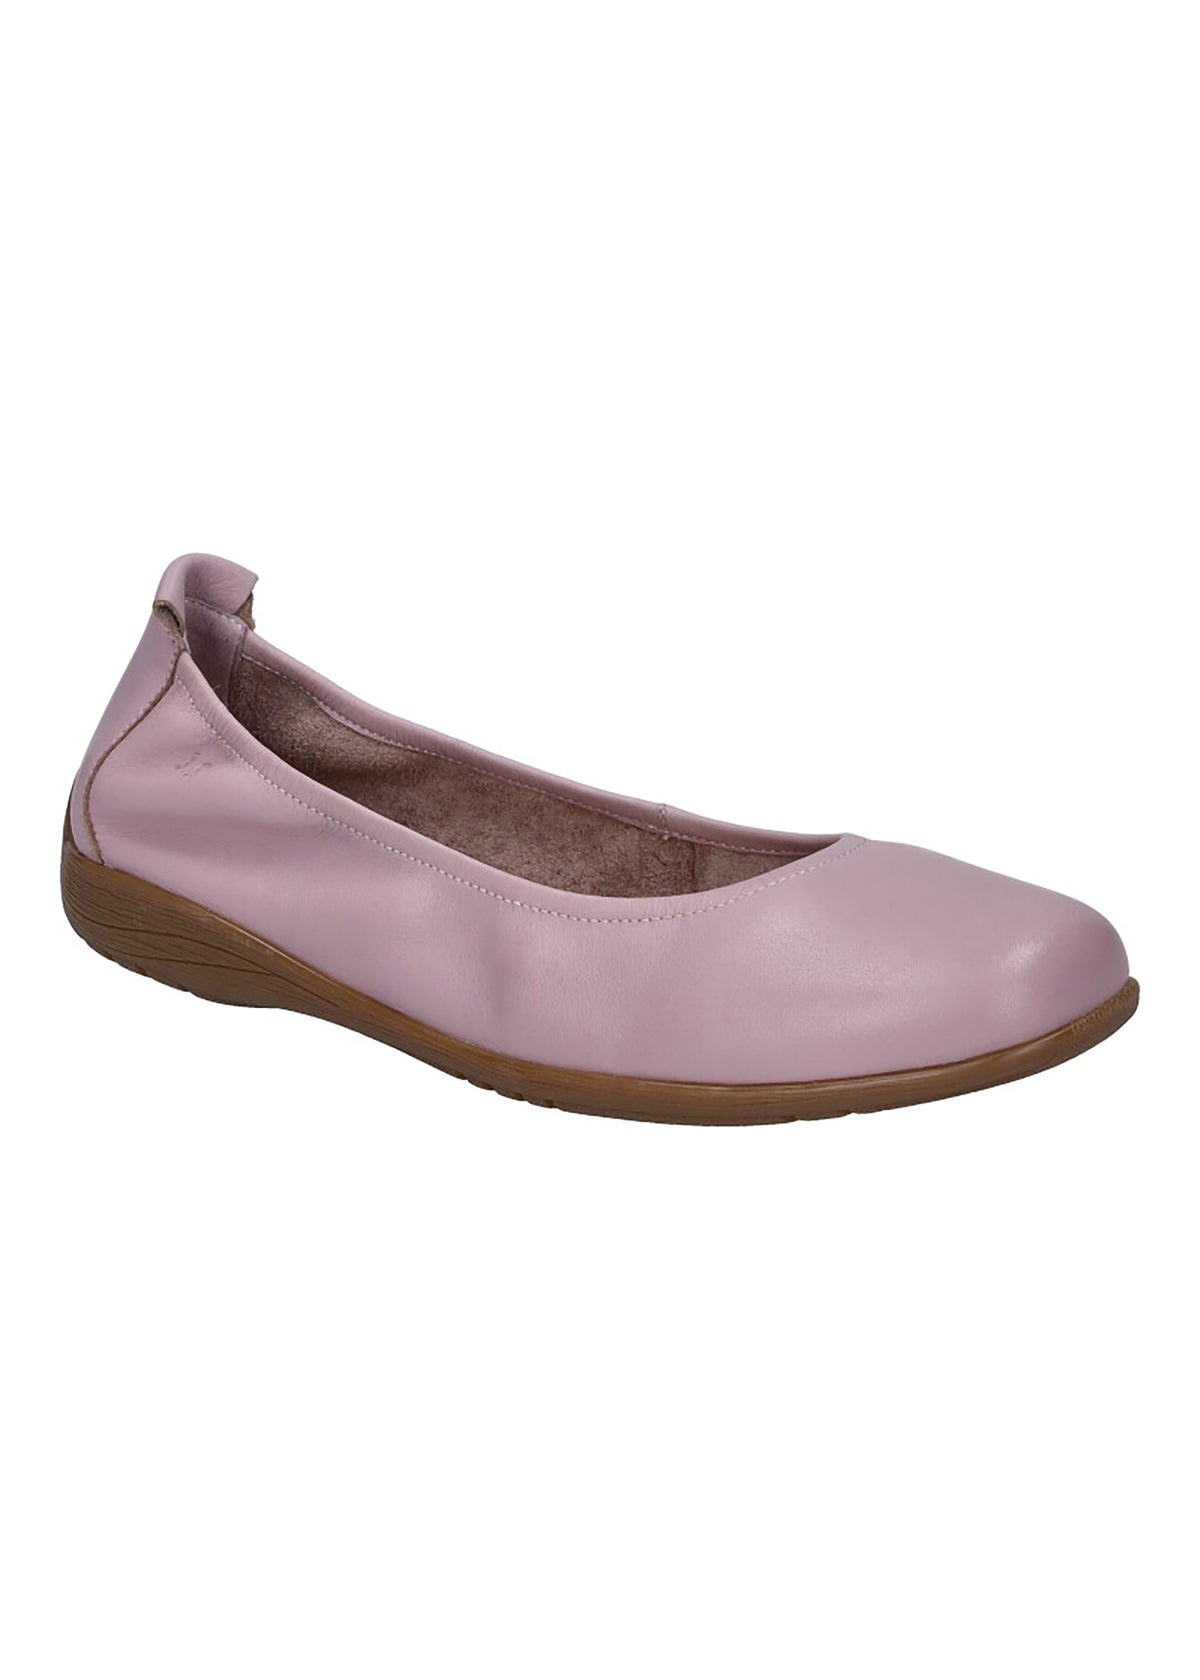 Ballerina shoes - purple leather, Fenja 01